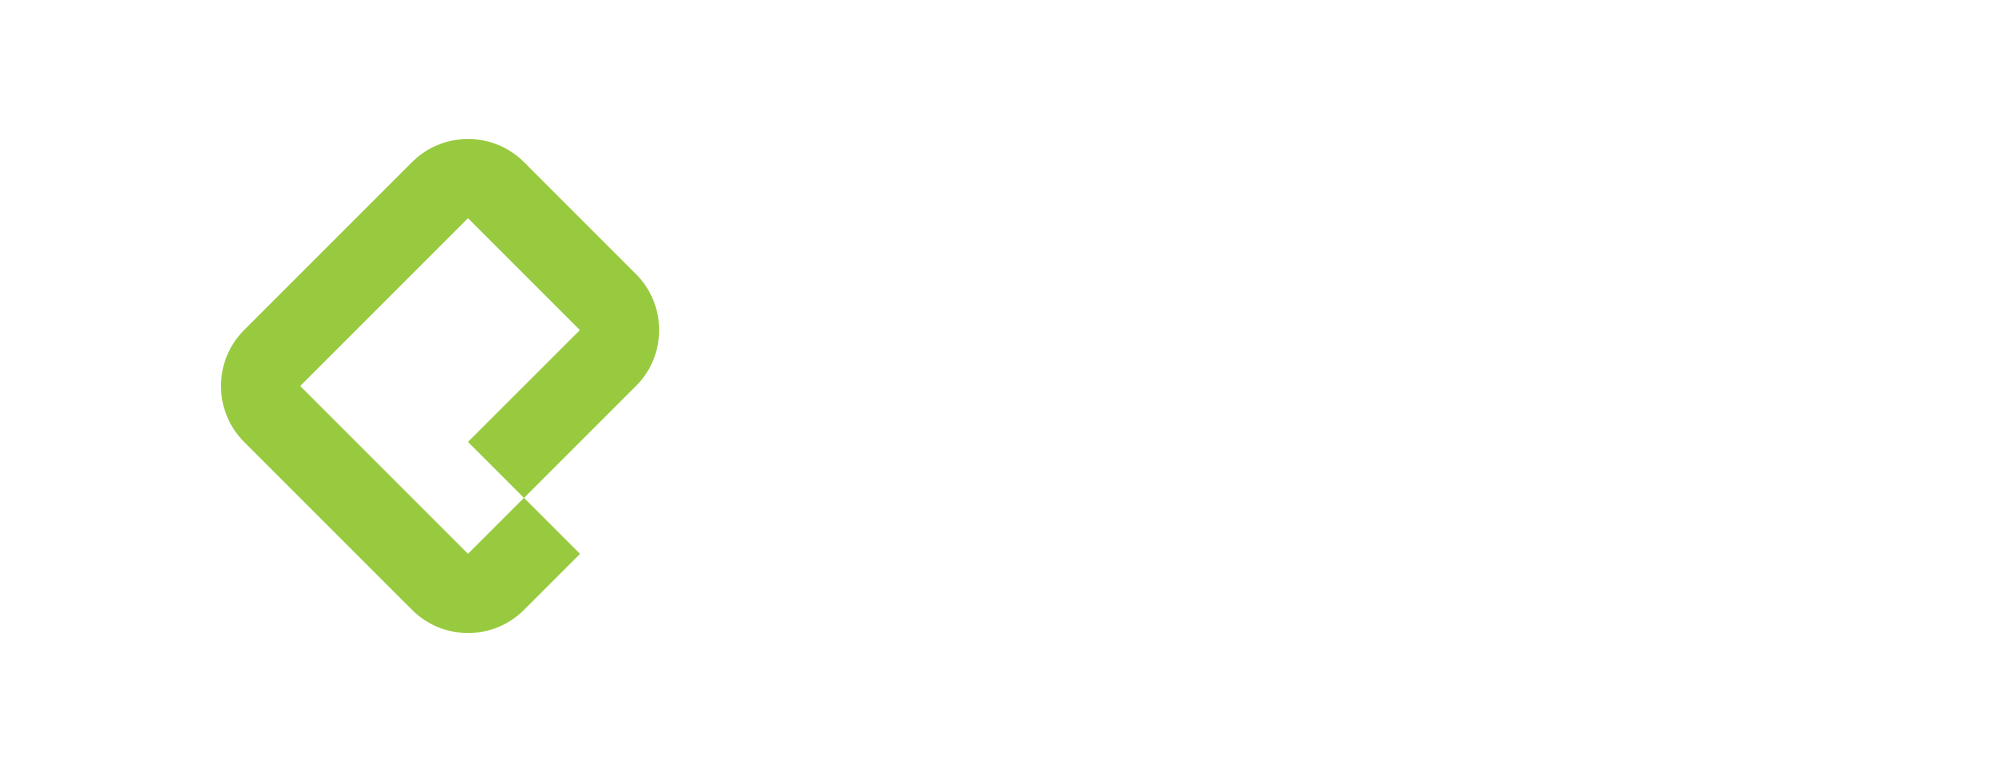 platzi logo